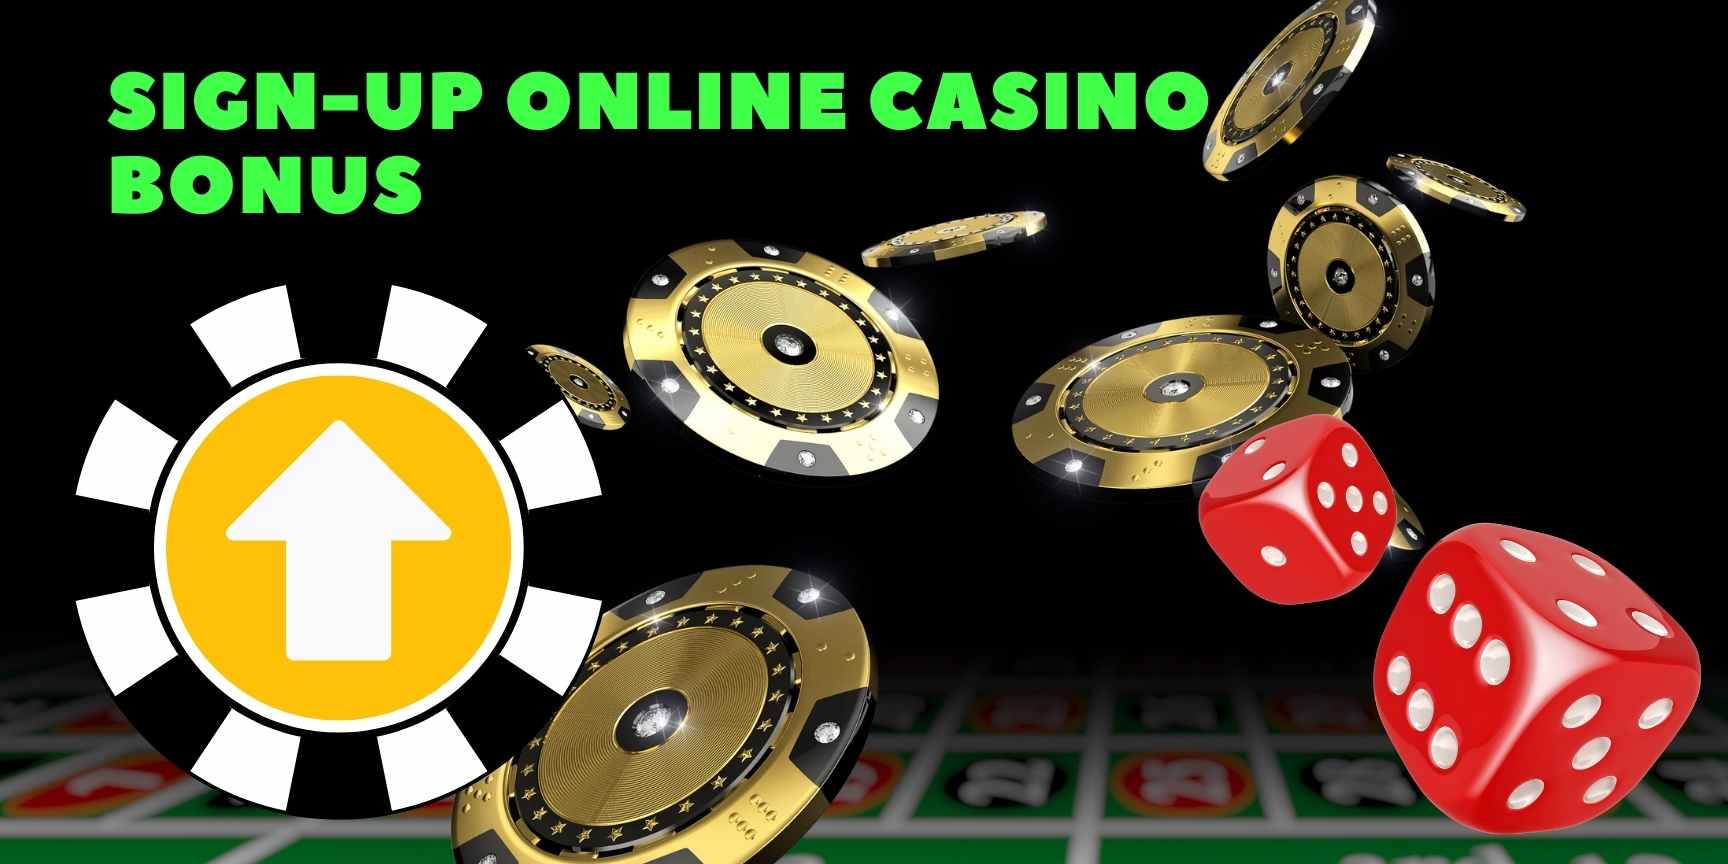 prism online casino sign up